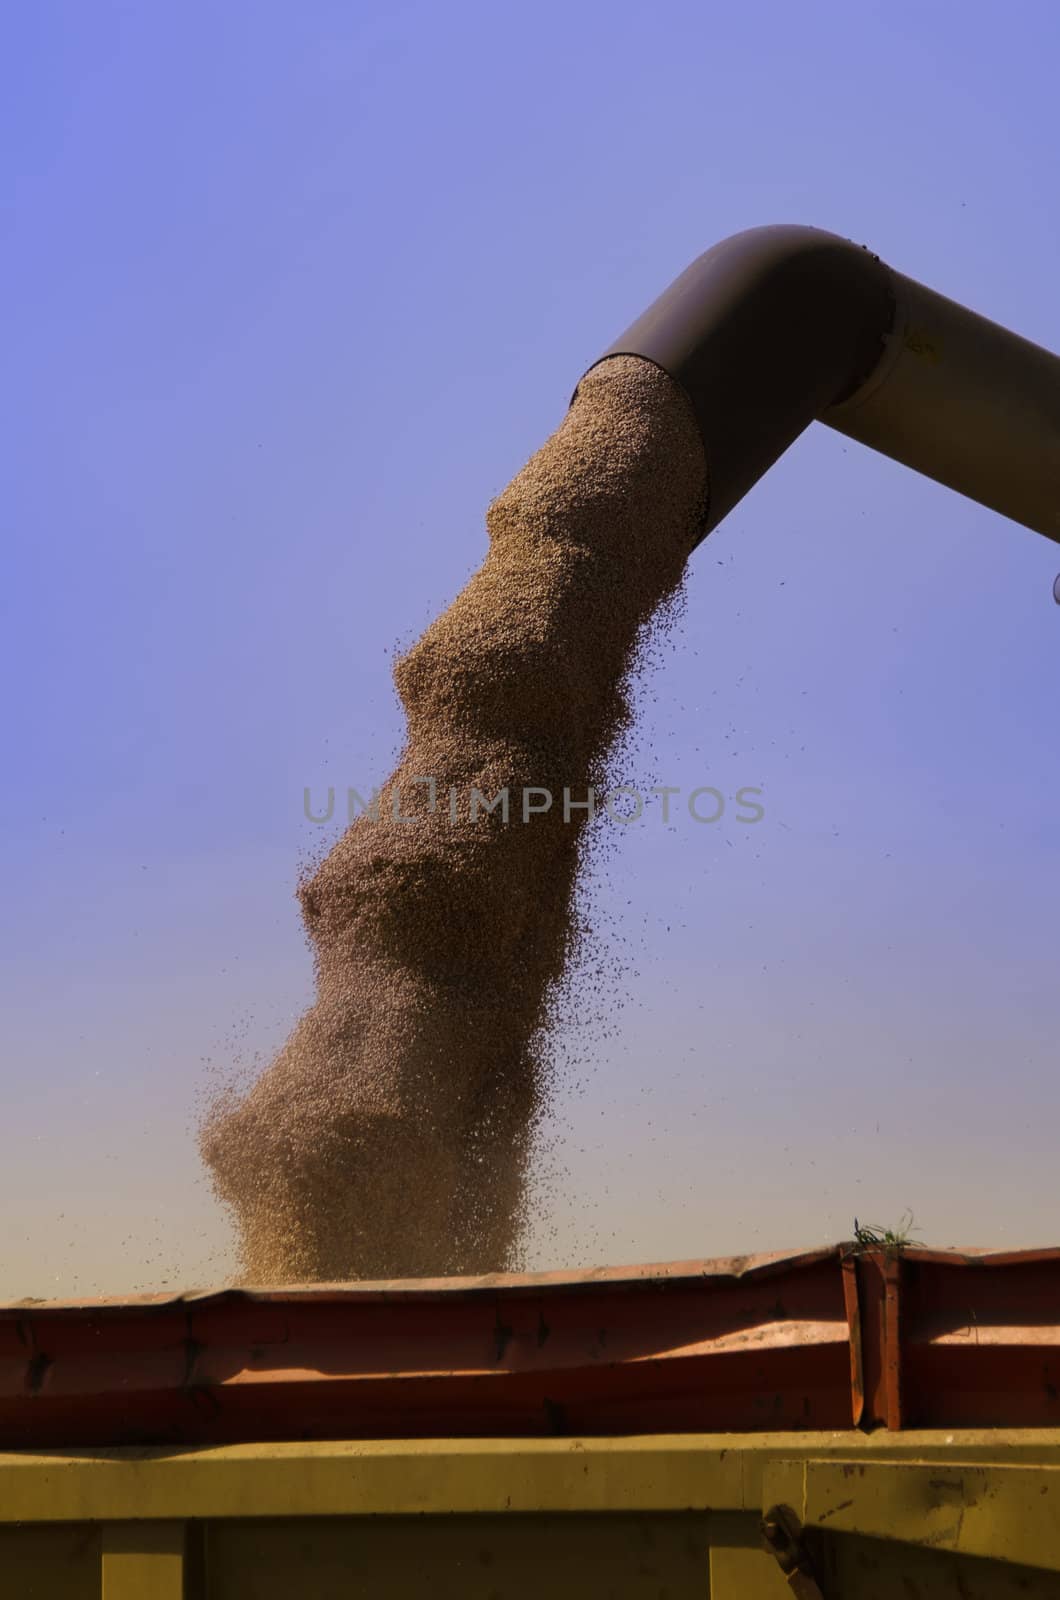 harvesting and tranvasement of wheat grains by njaj